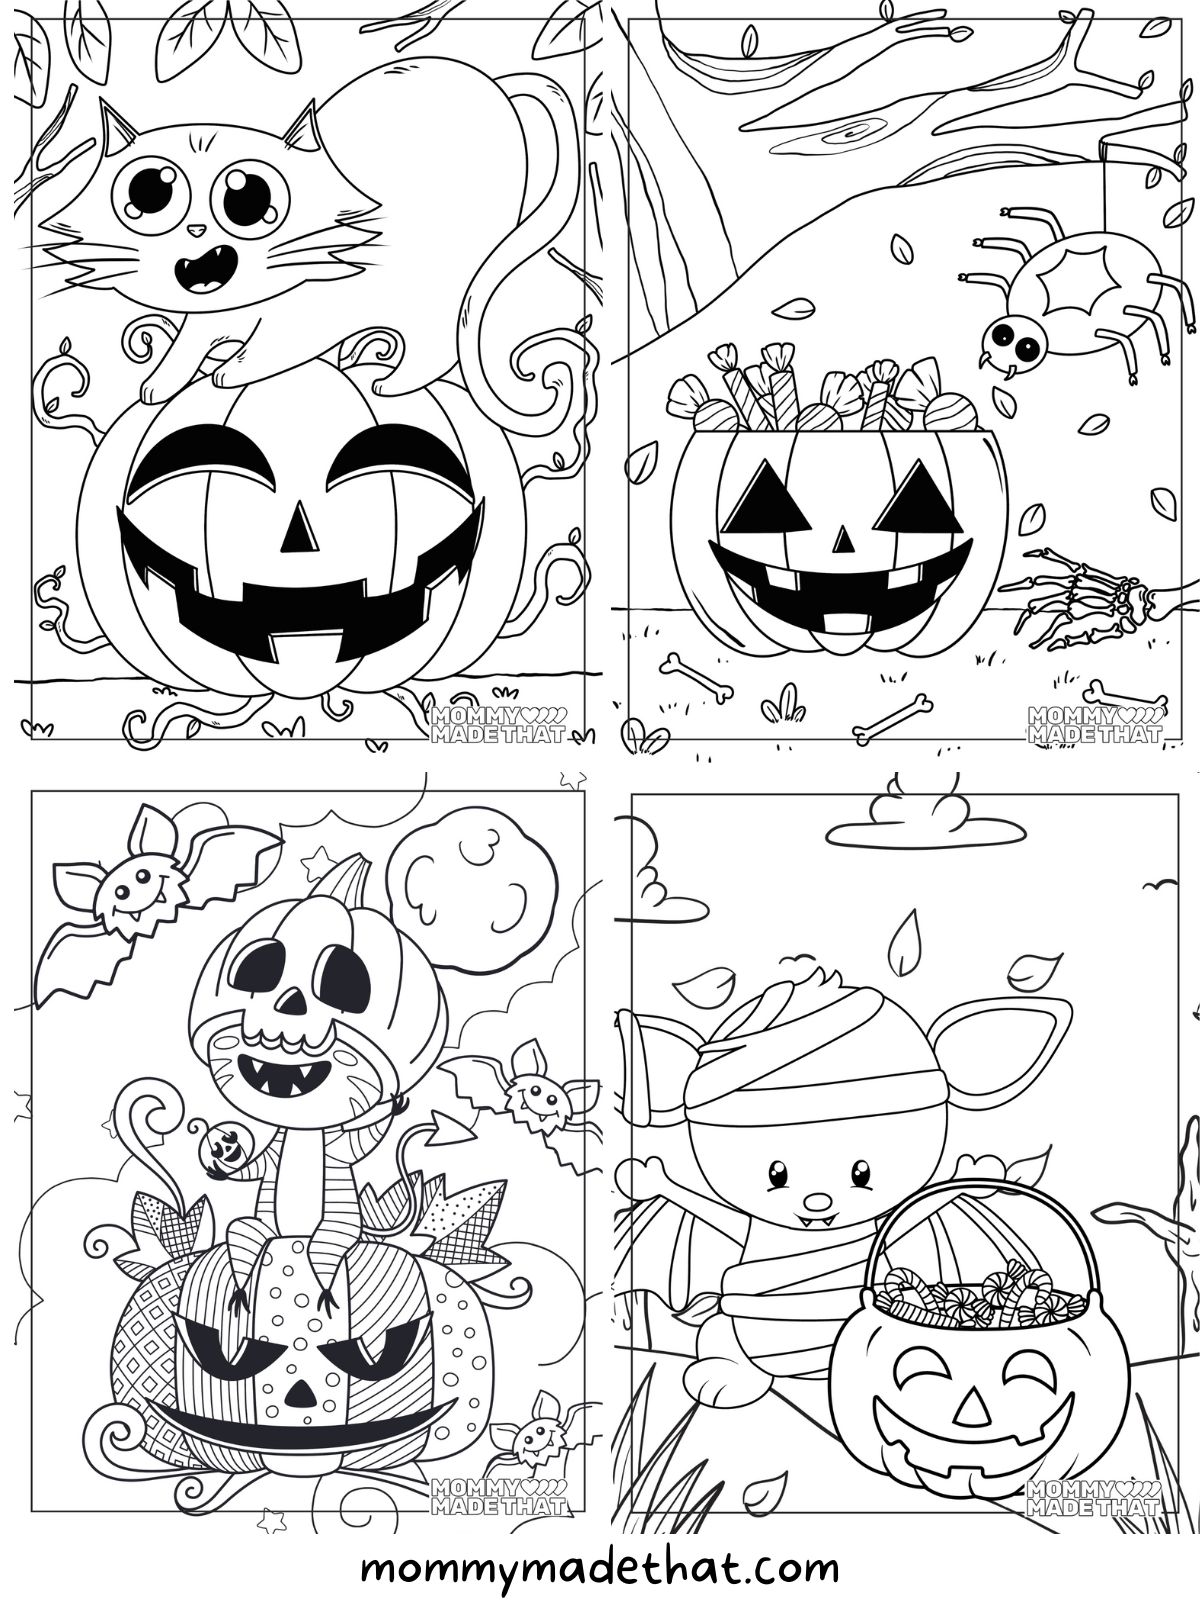 Jack o lantern coloring pages lots of fun free printables